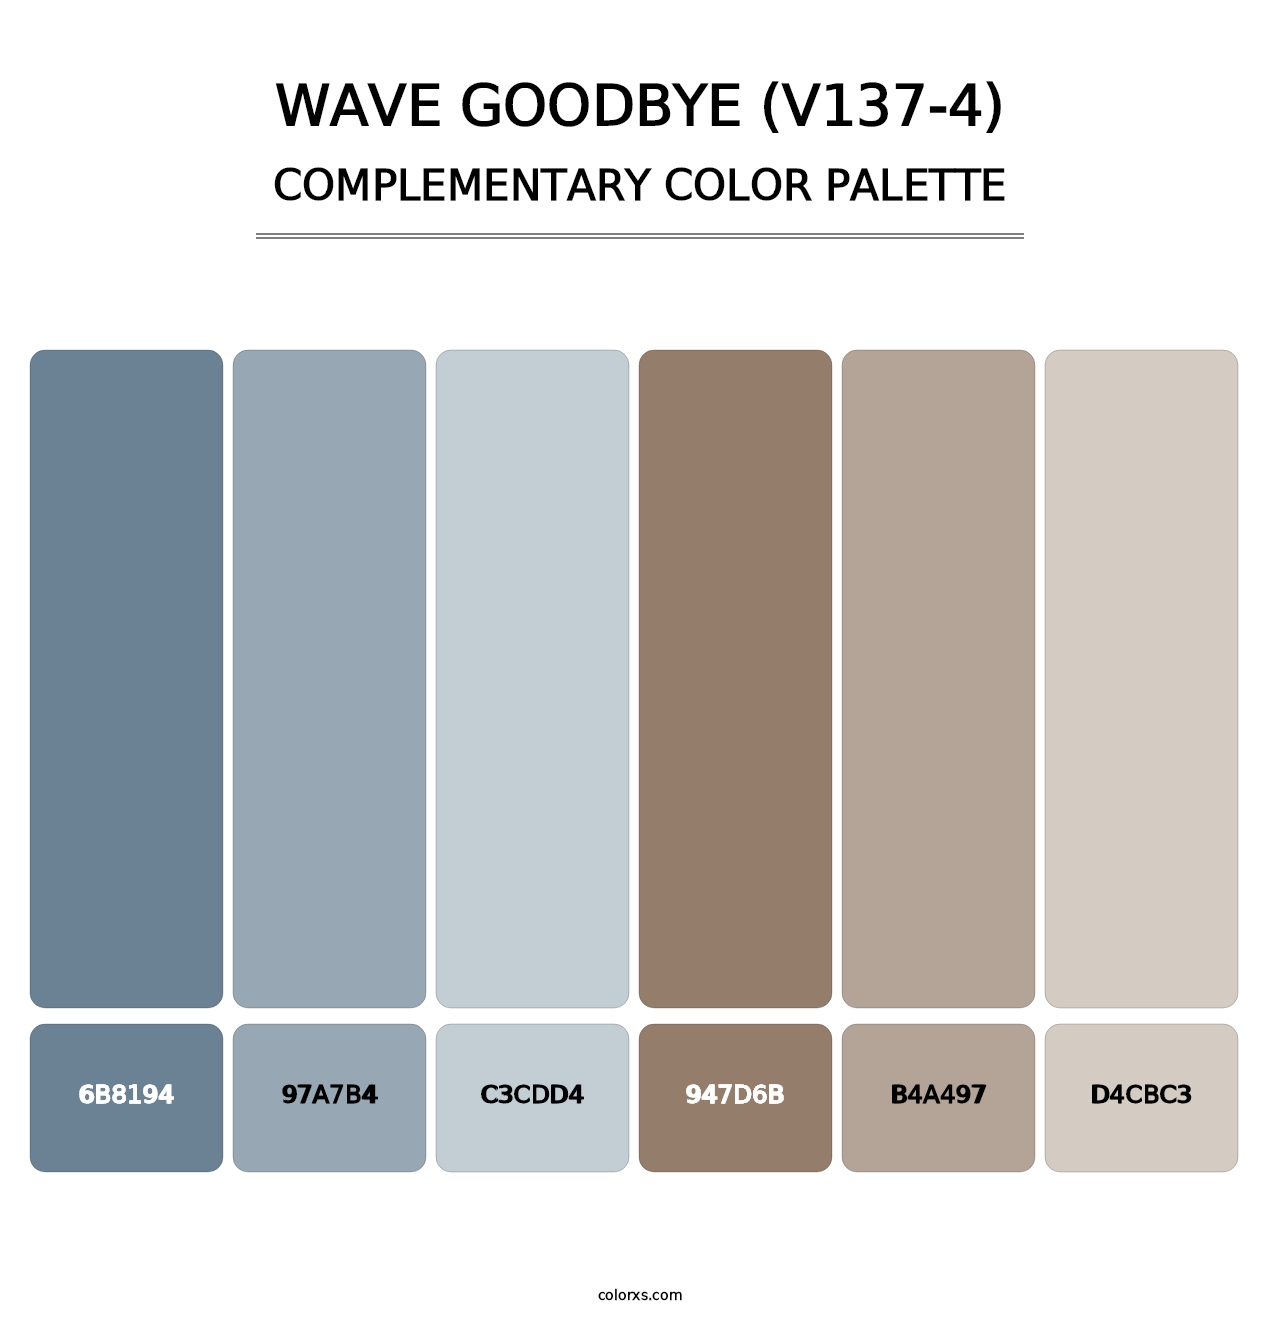 Wave Goodbye (V137-4) - Complementary Color Palette